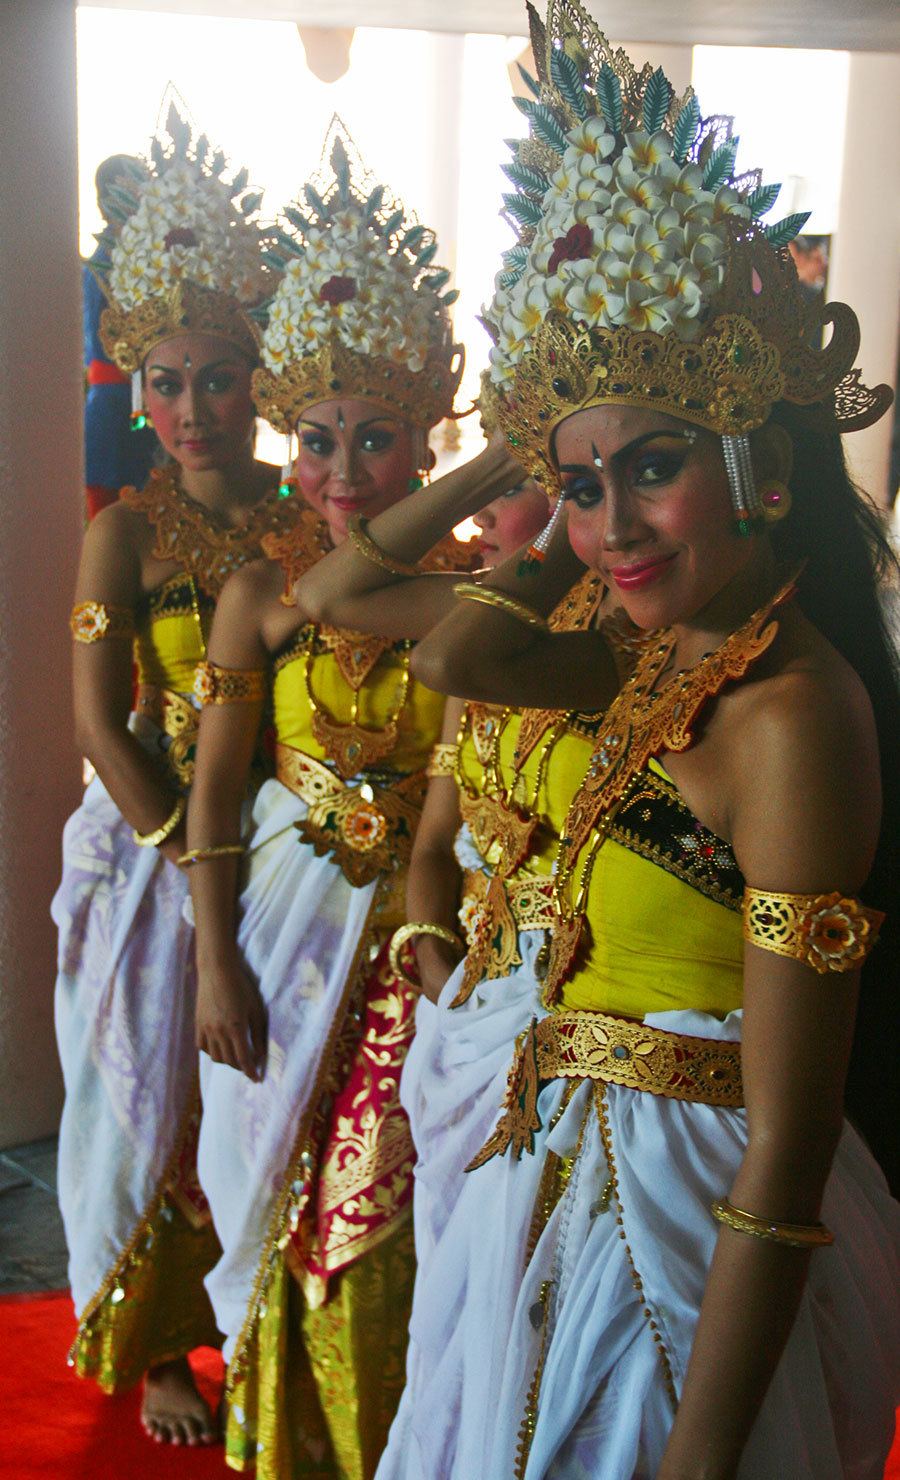 balinese-dancers